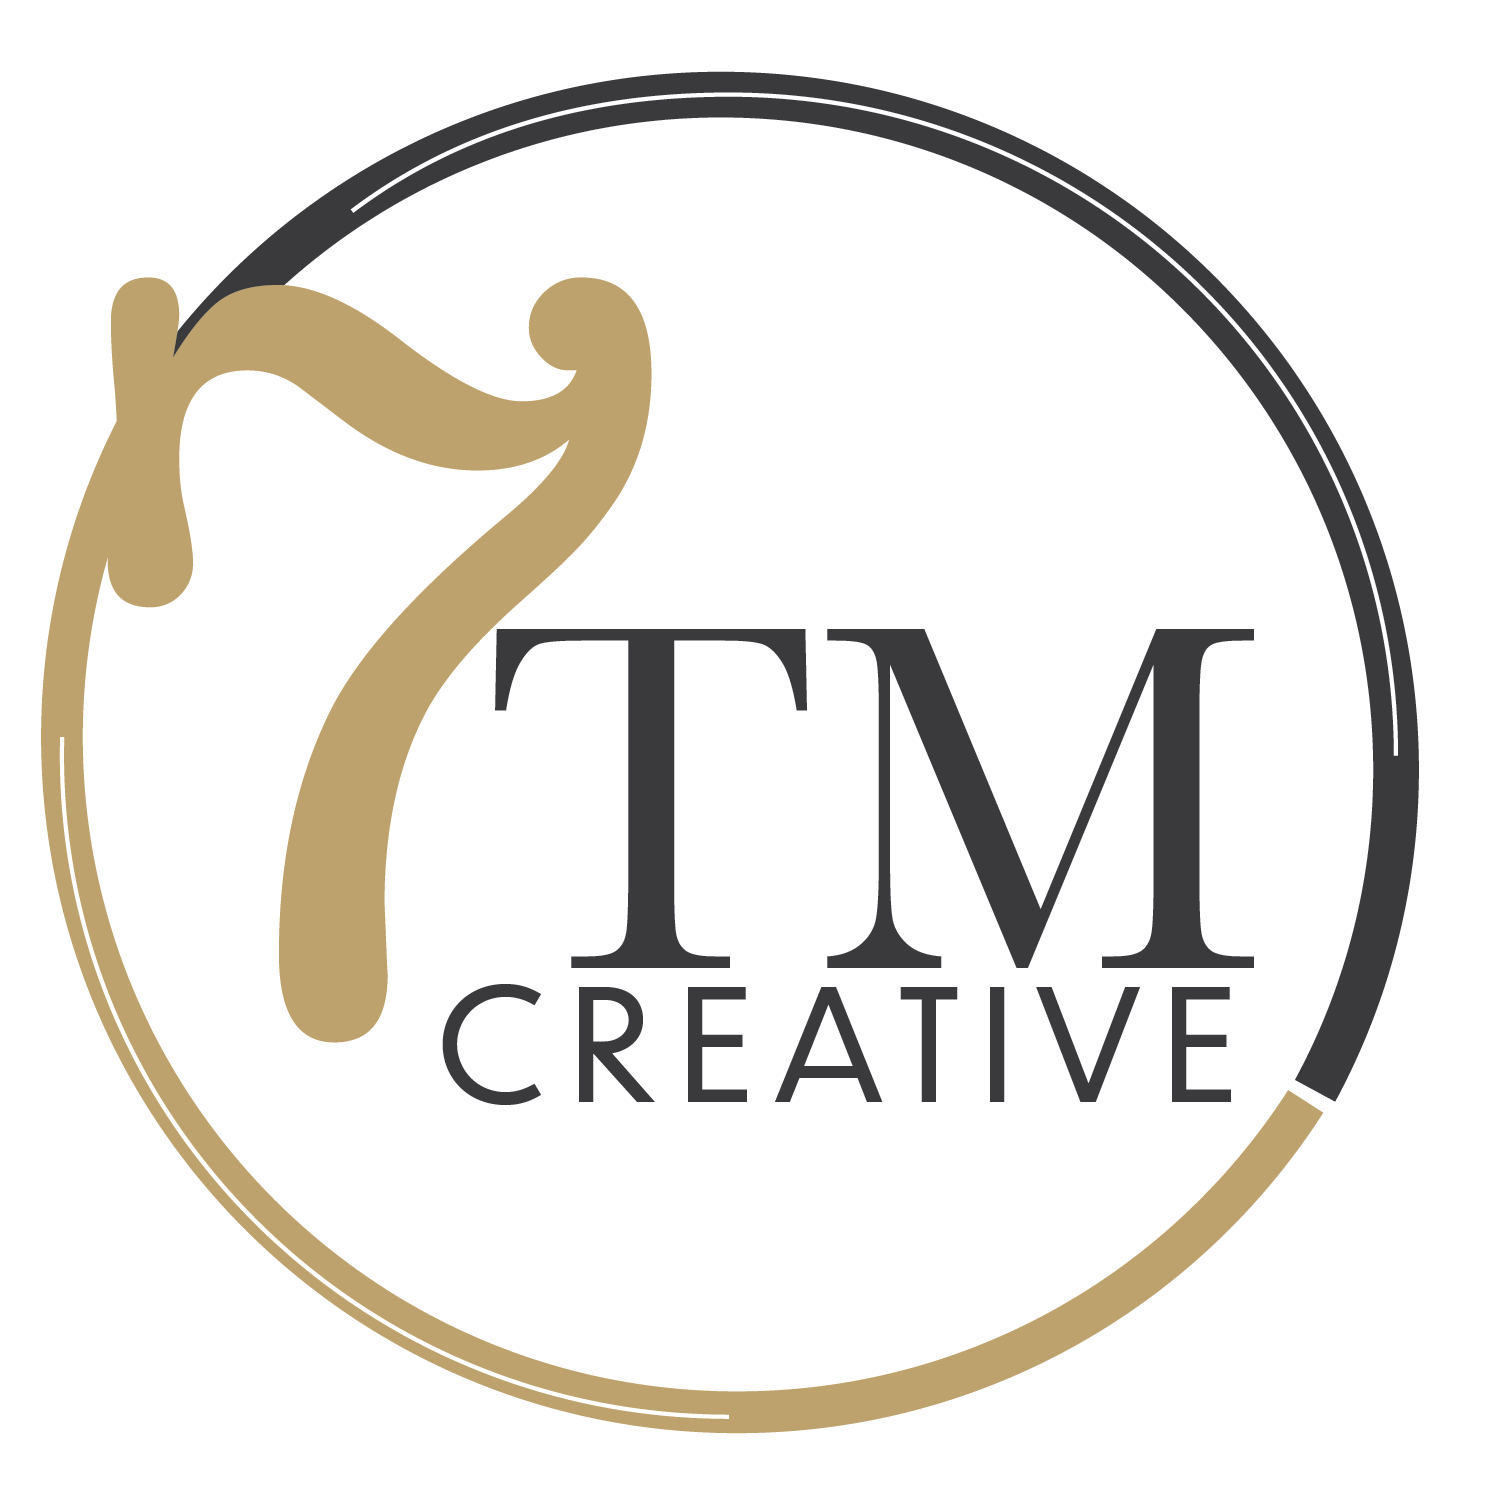 7TM Creative